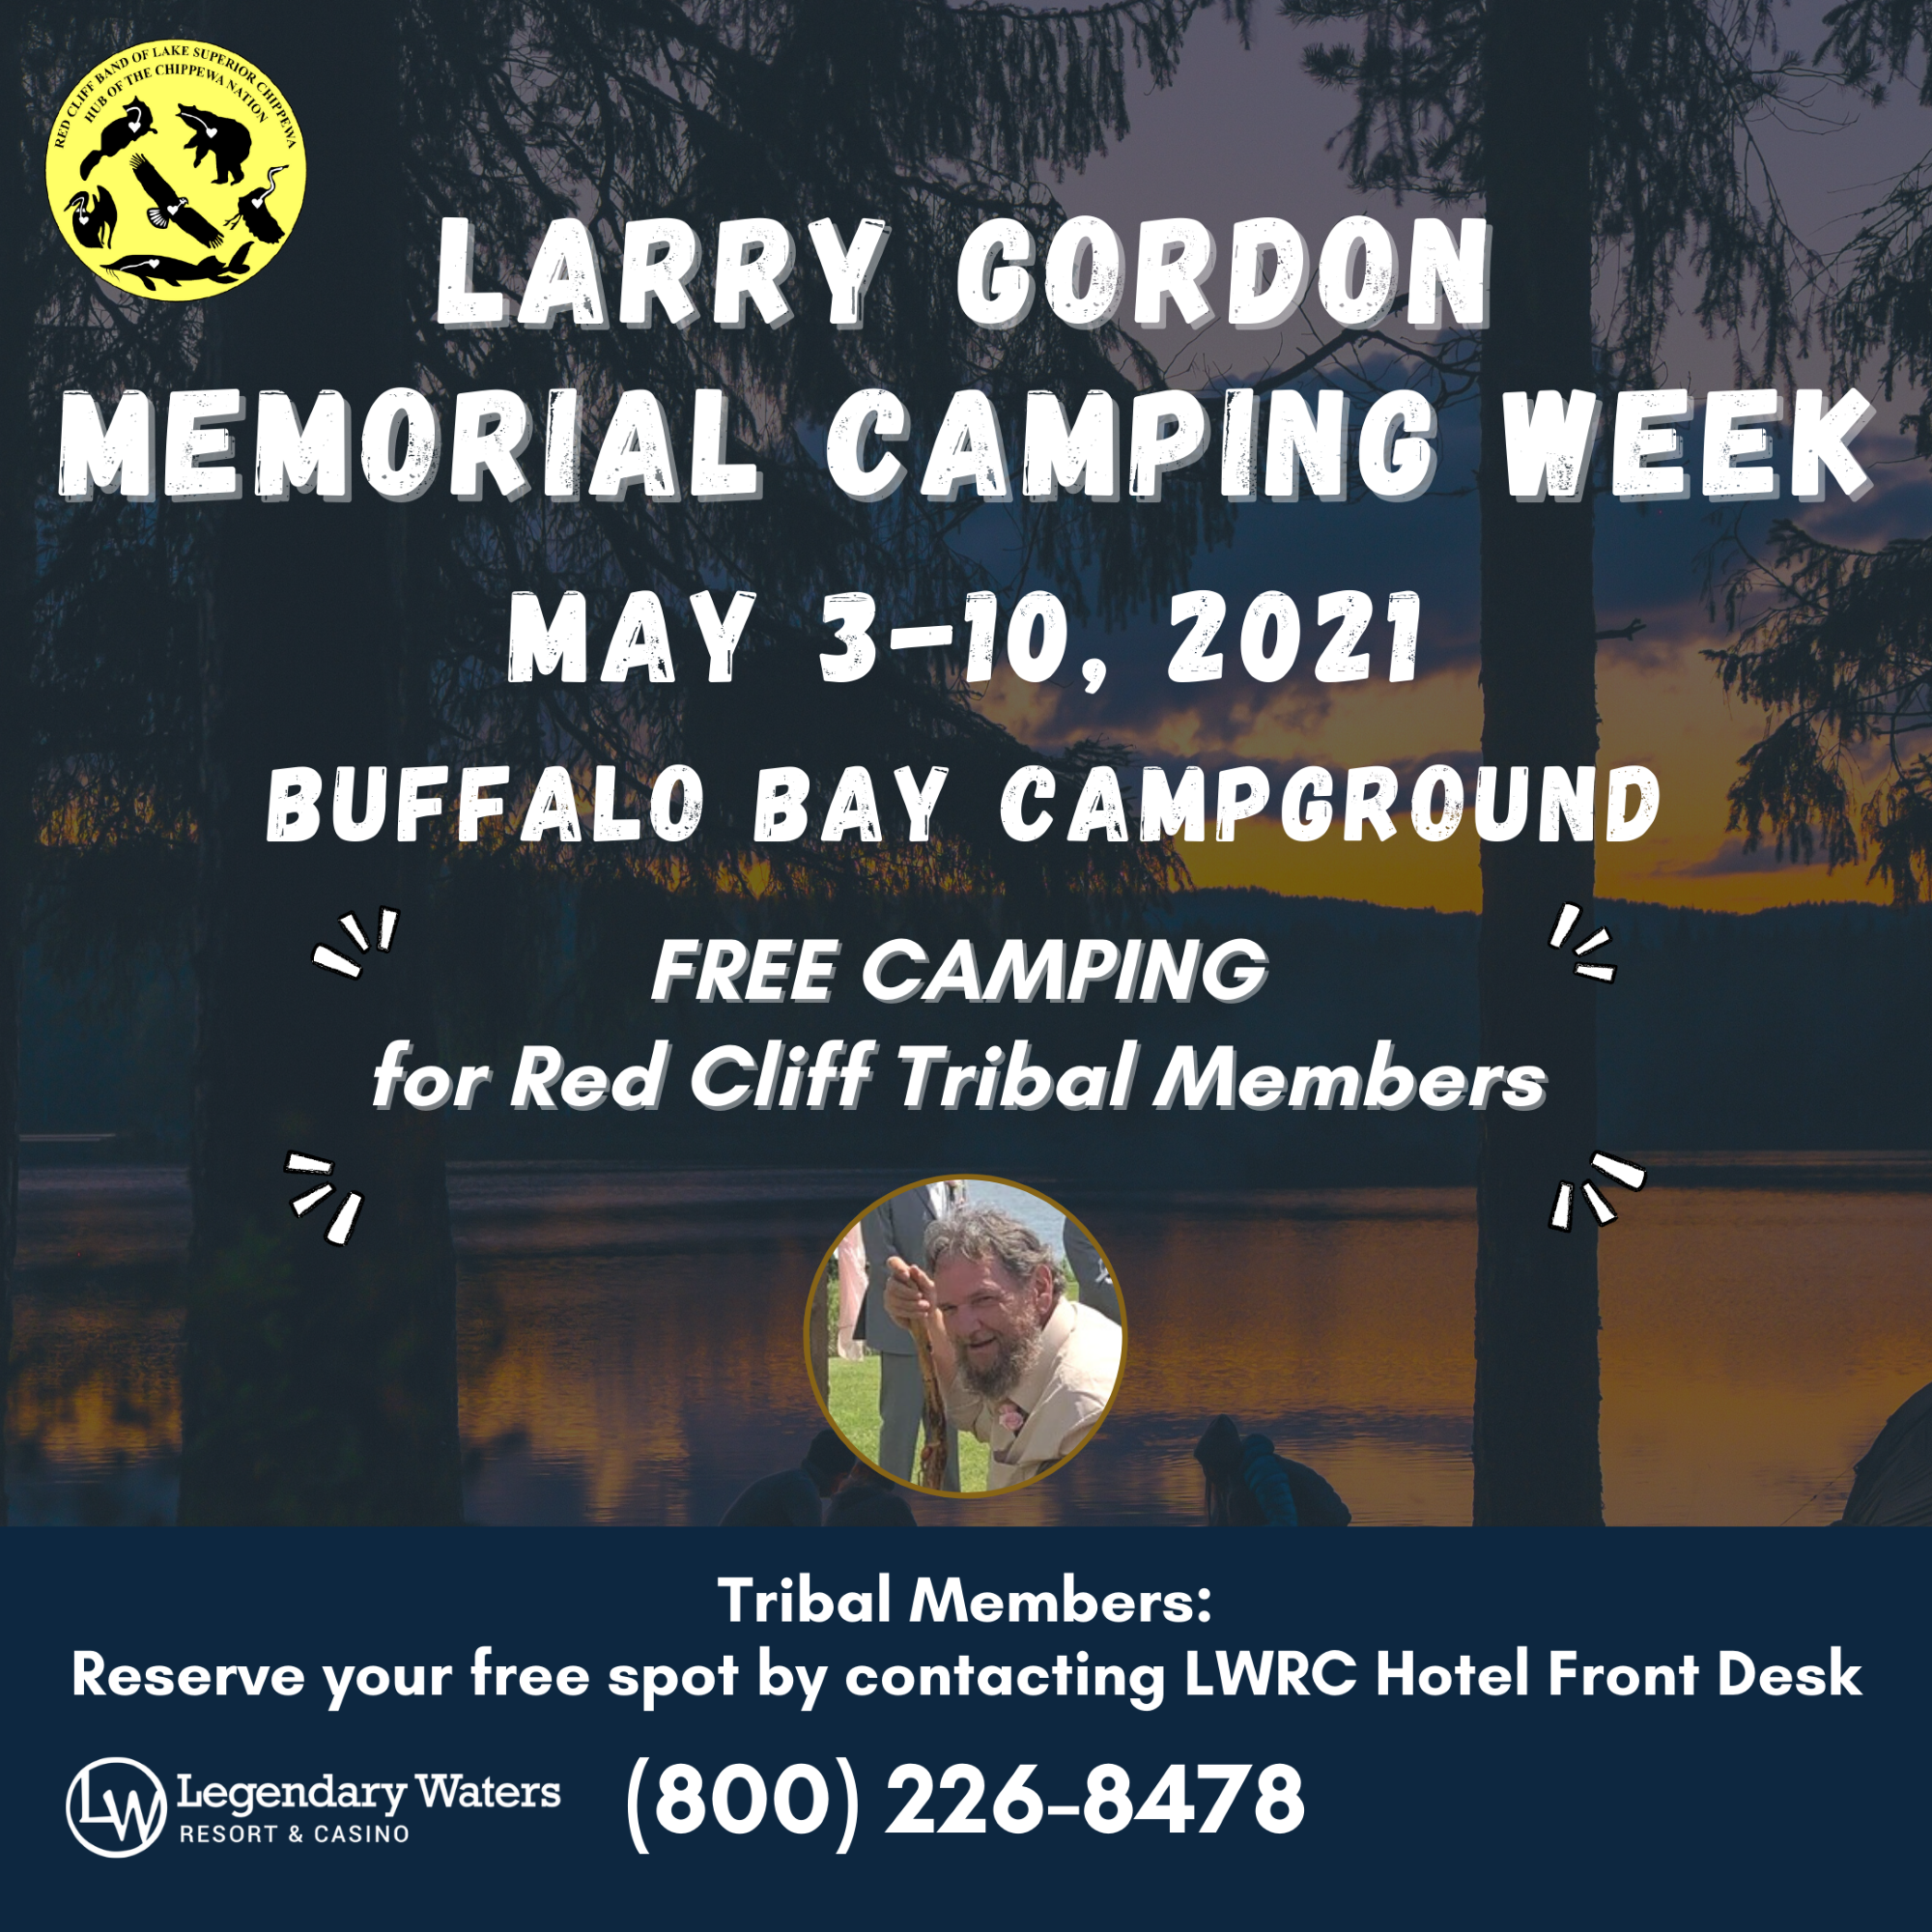 Larry Gordon Memorial Camping Week flyer resized